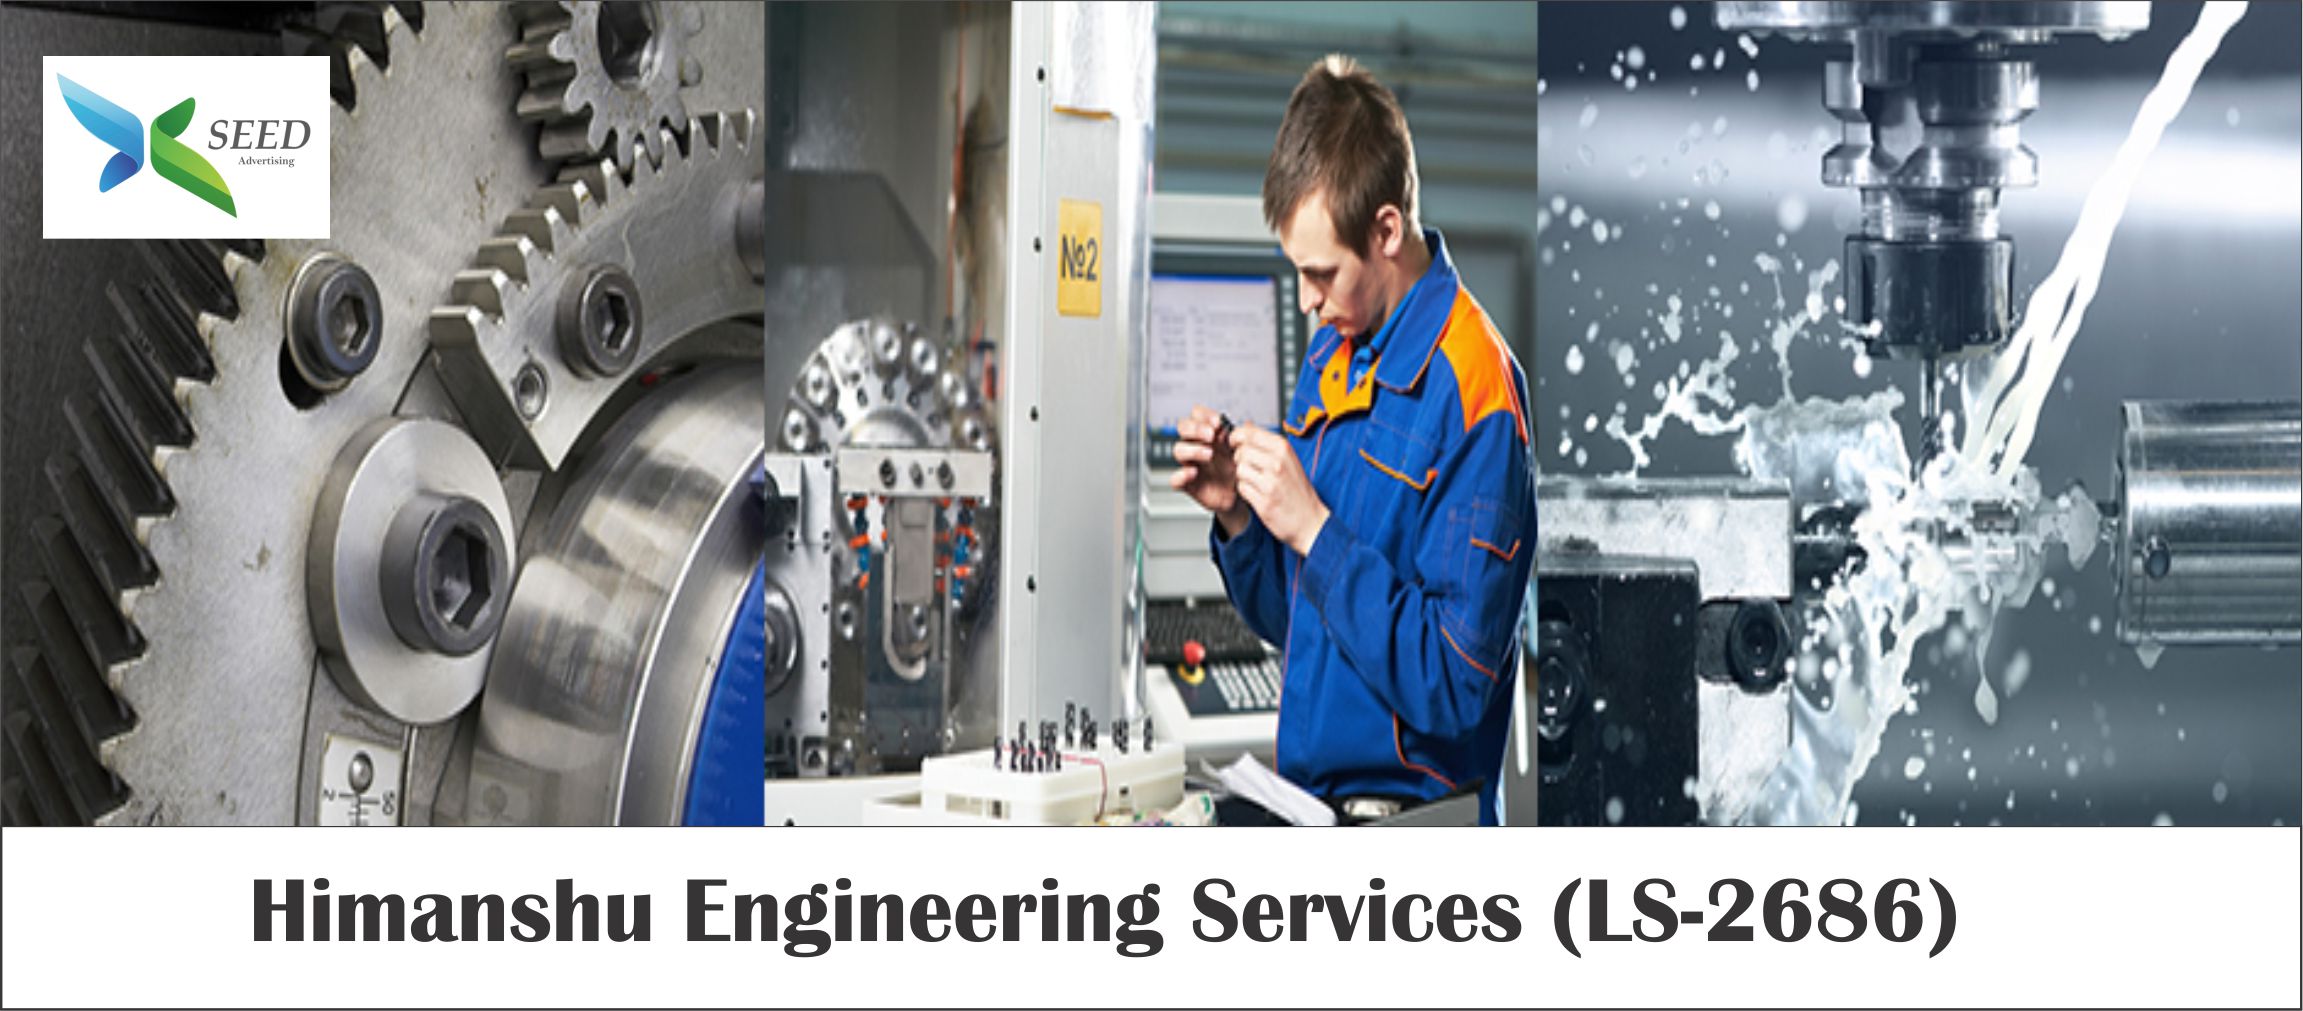 Himanshu Engineering Services